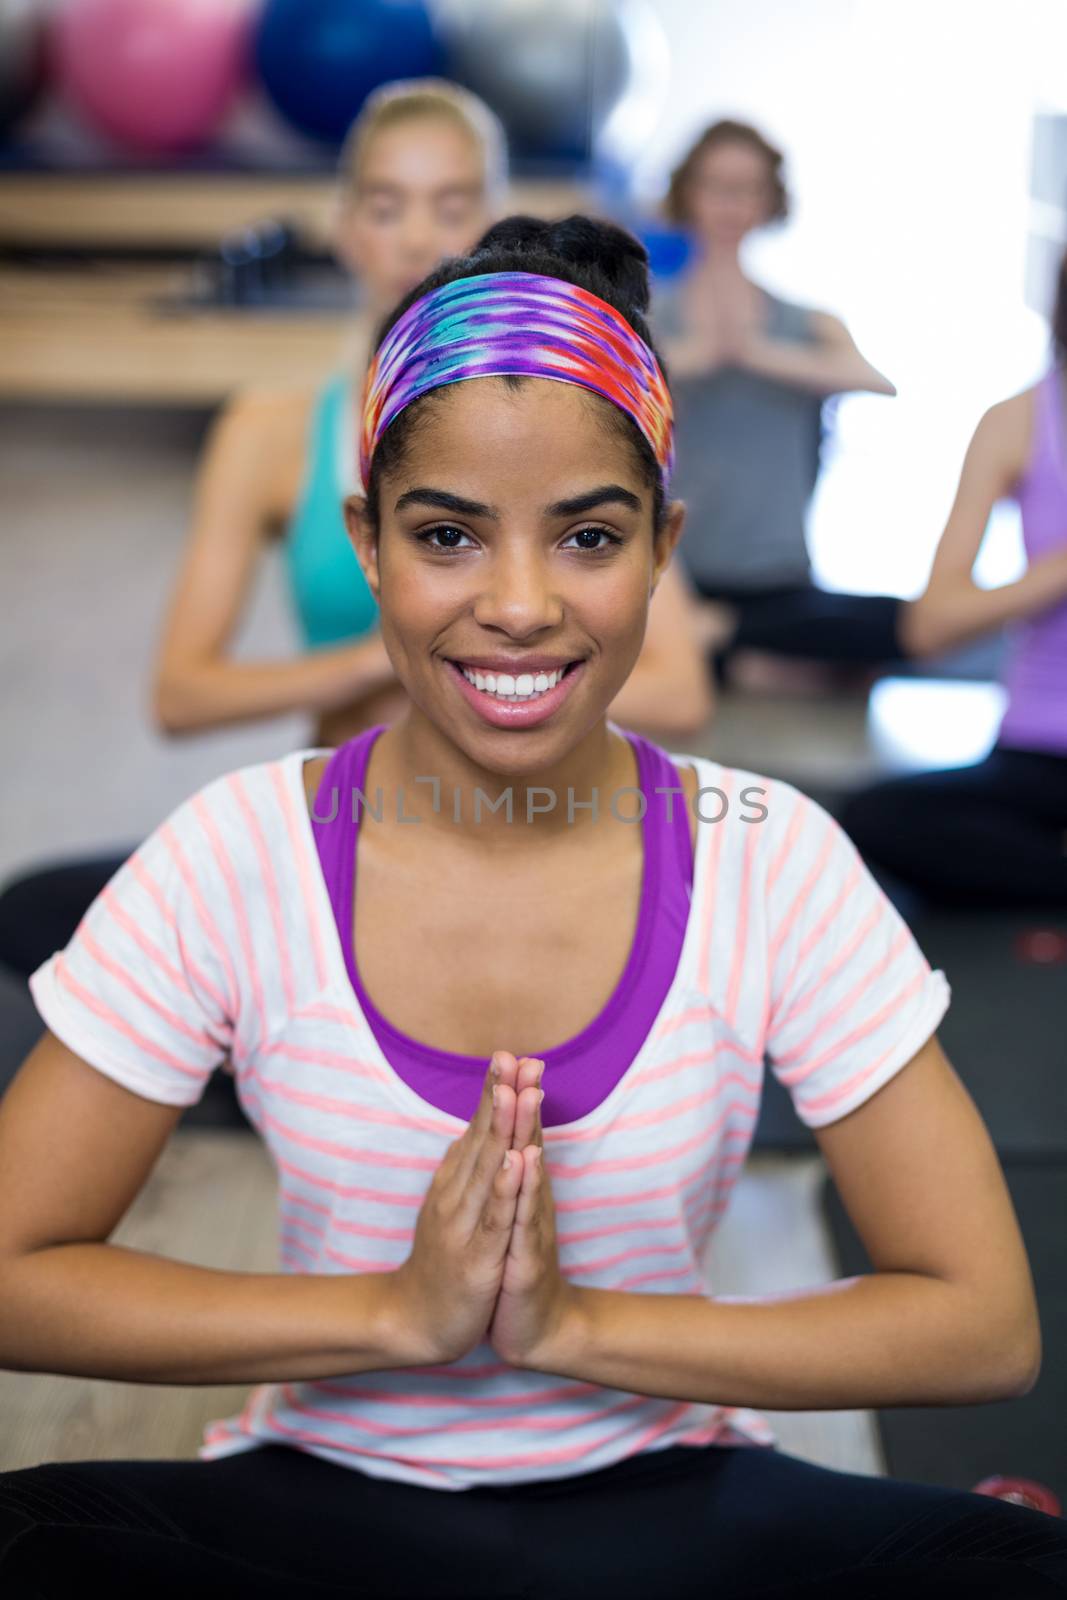 Smiling woman doing yoga in gym by Wavebreakmedia